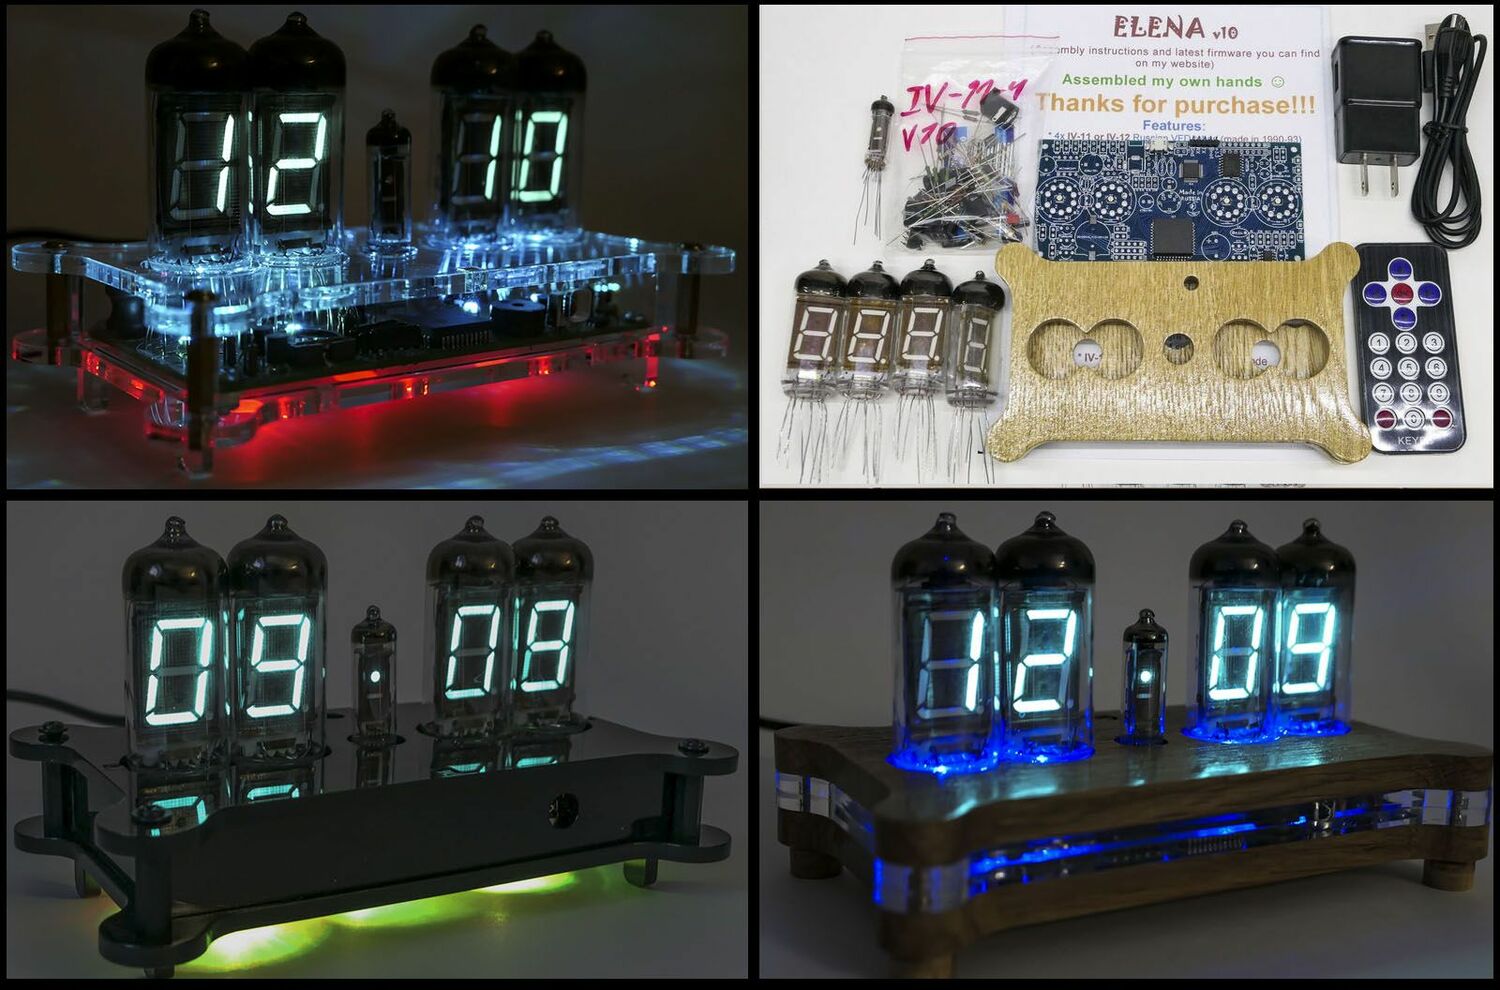 DIY KIT Elena IV-11 VFD desk clock